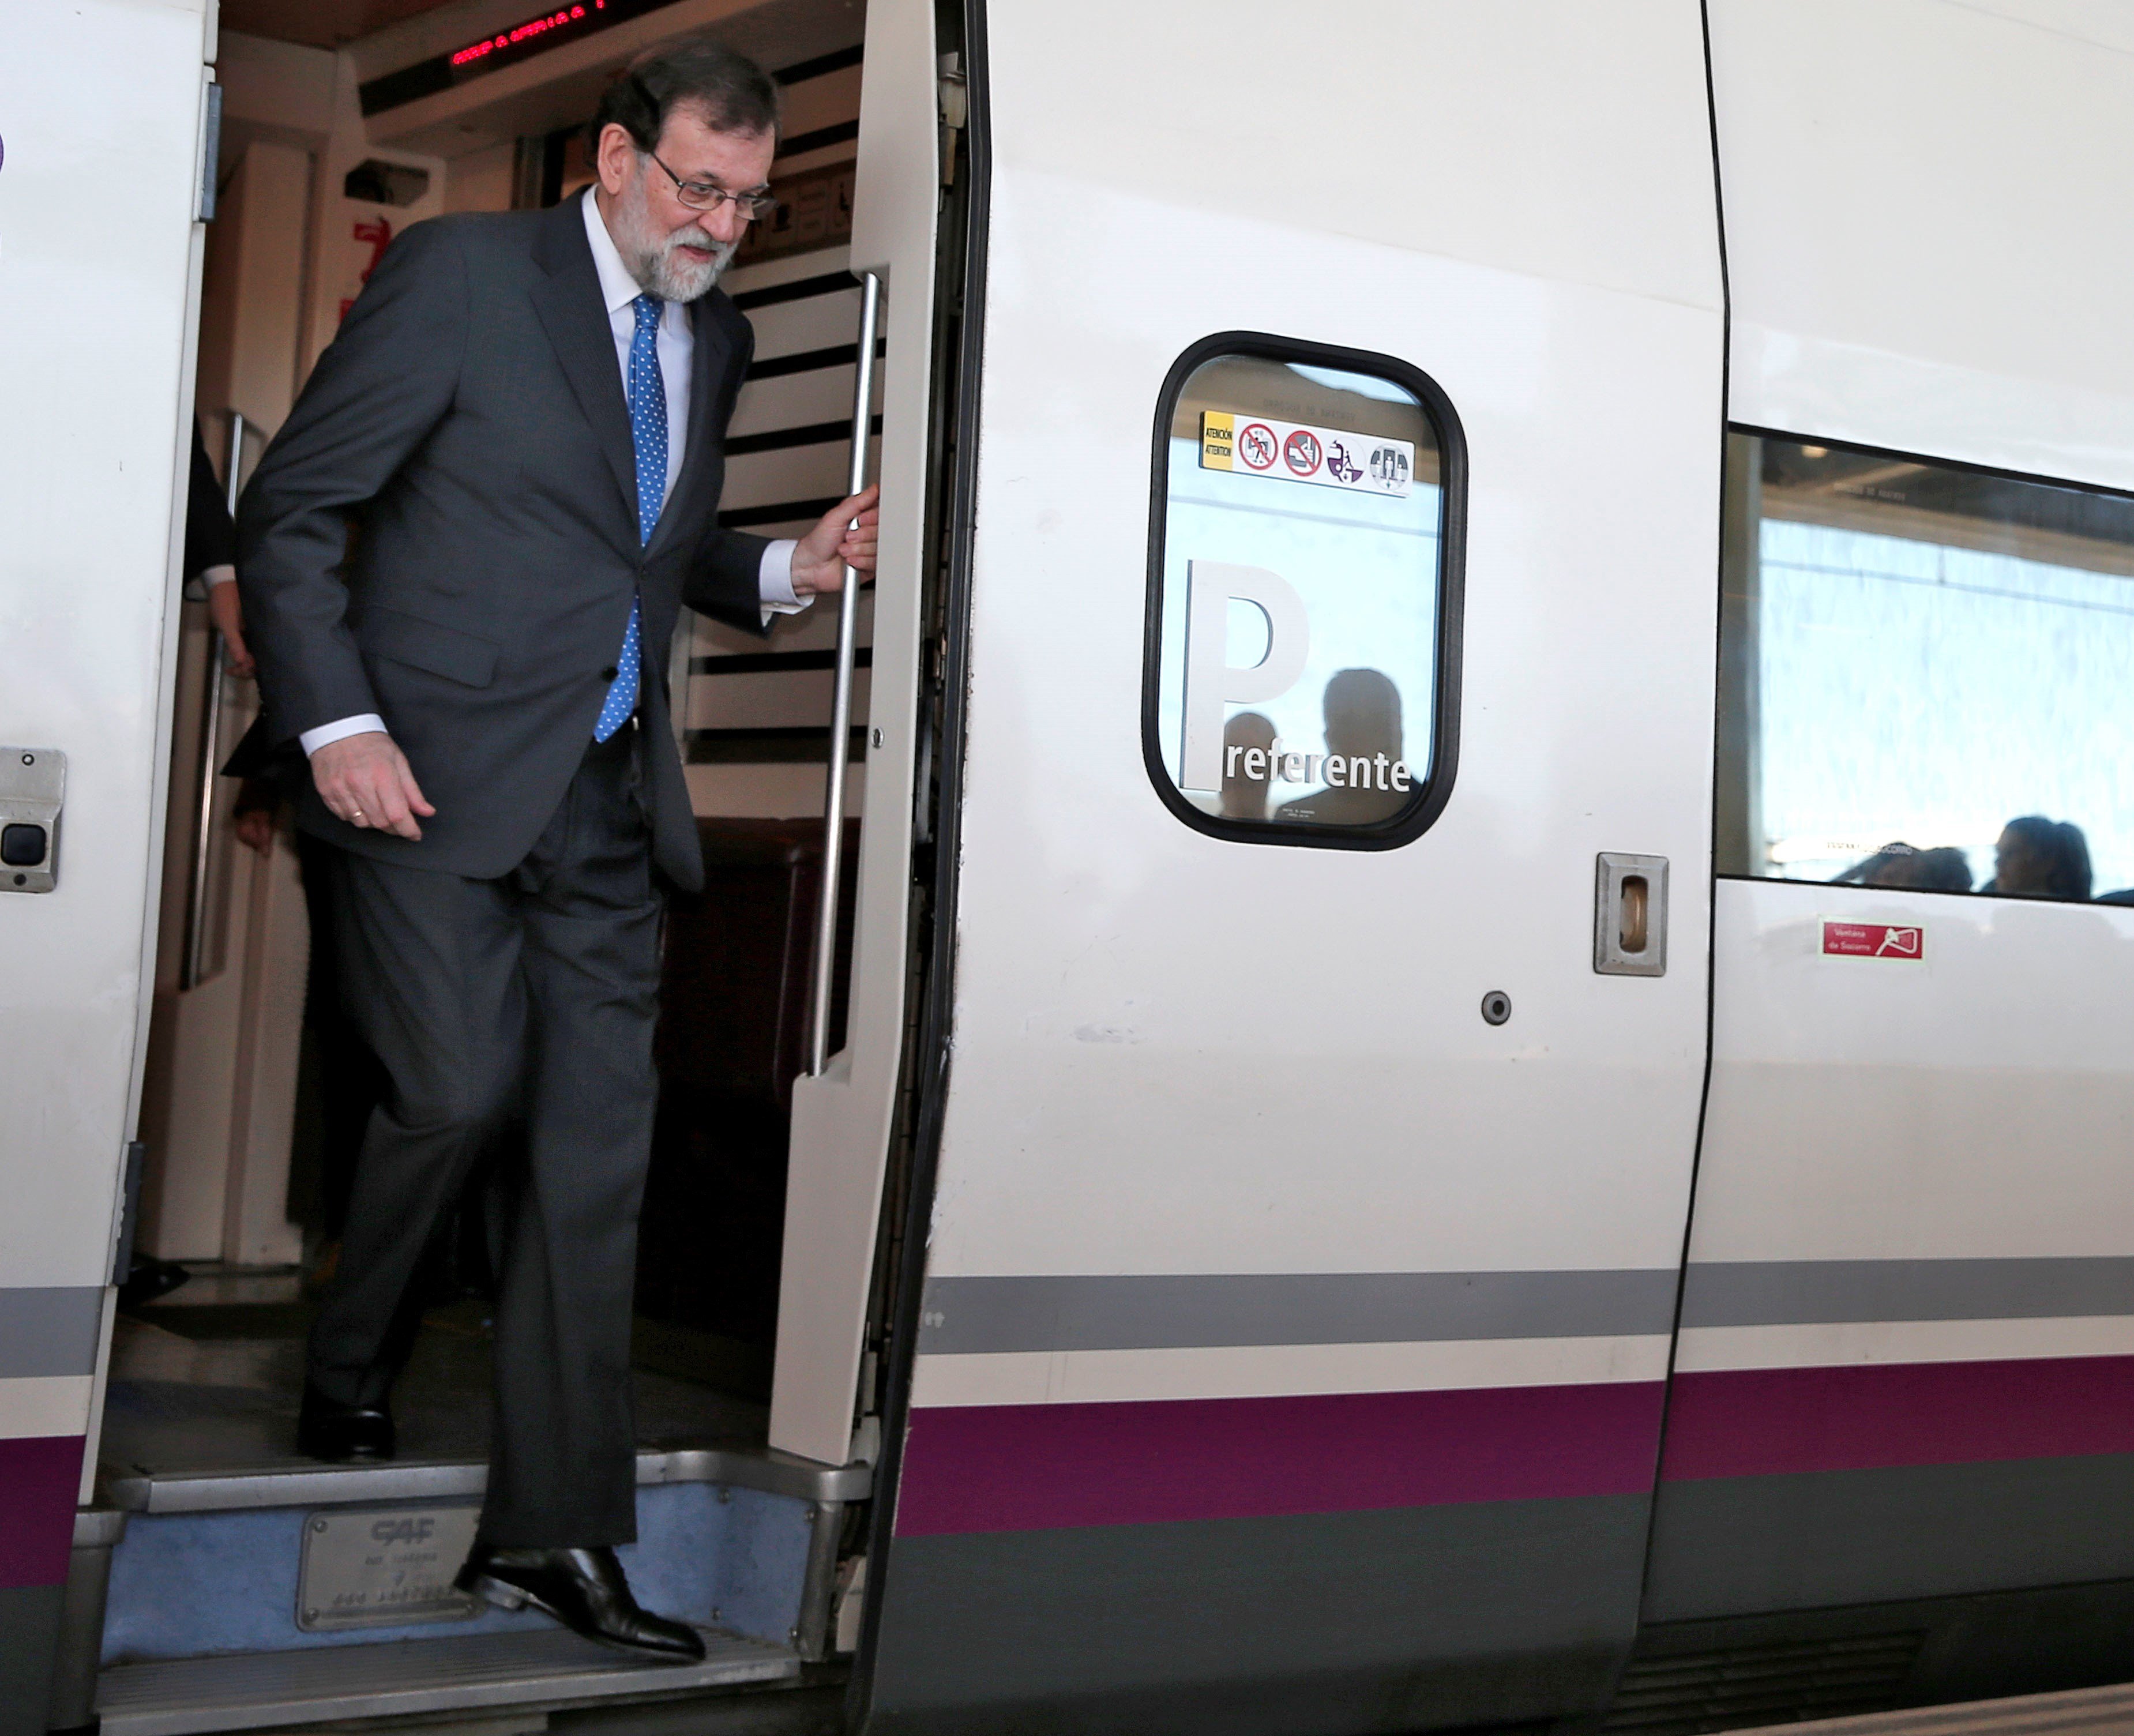 Inaugural high-speed train breaks down with Rajoy inside